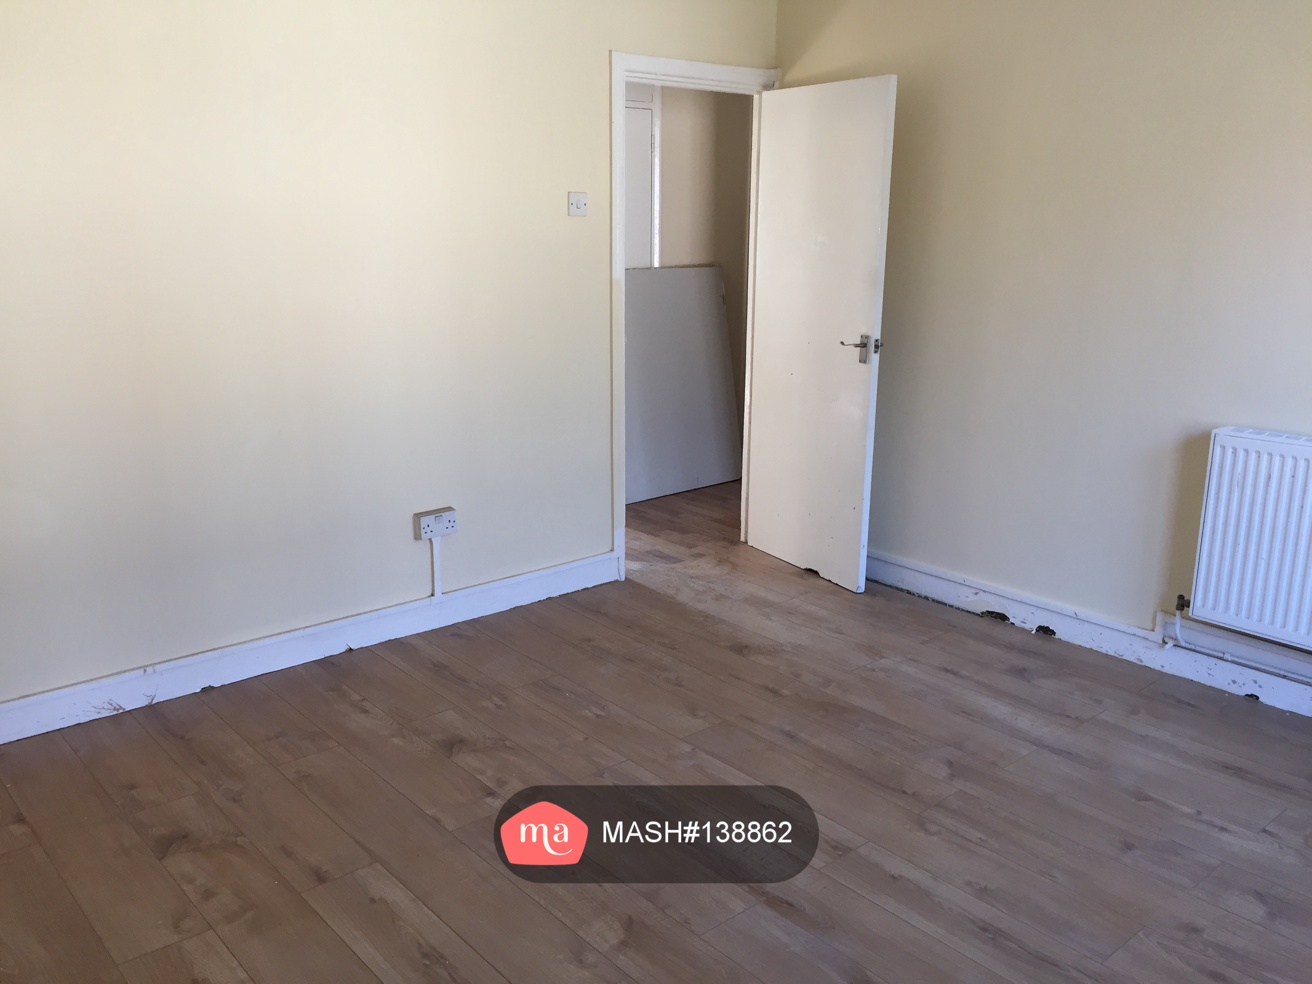 3 Bedroom Flat to rent in London - Mashroom